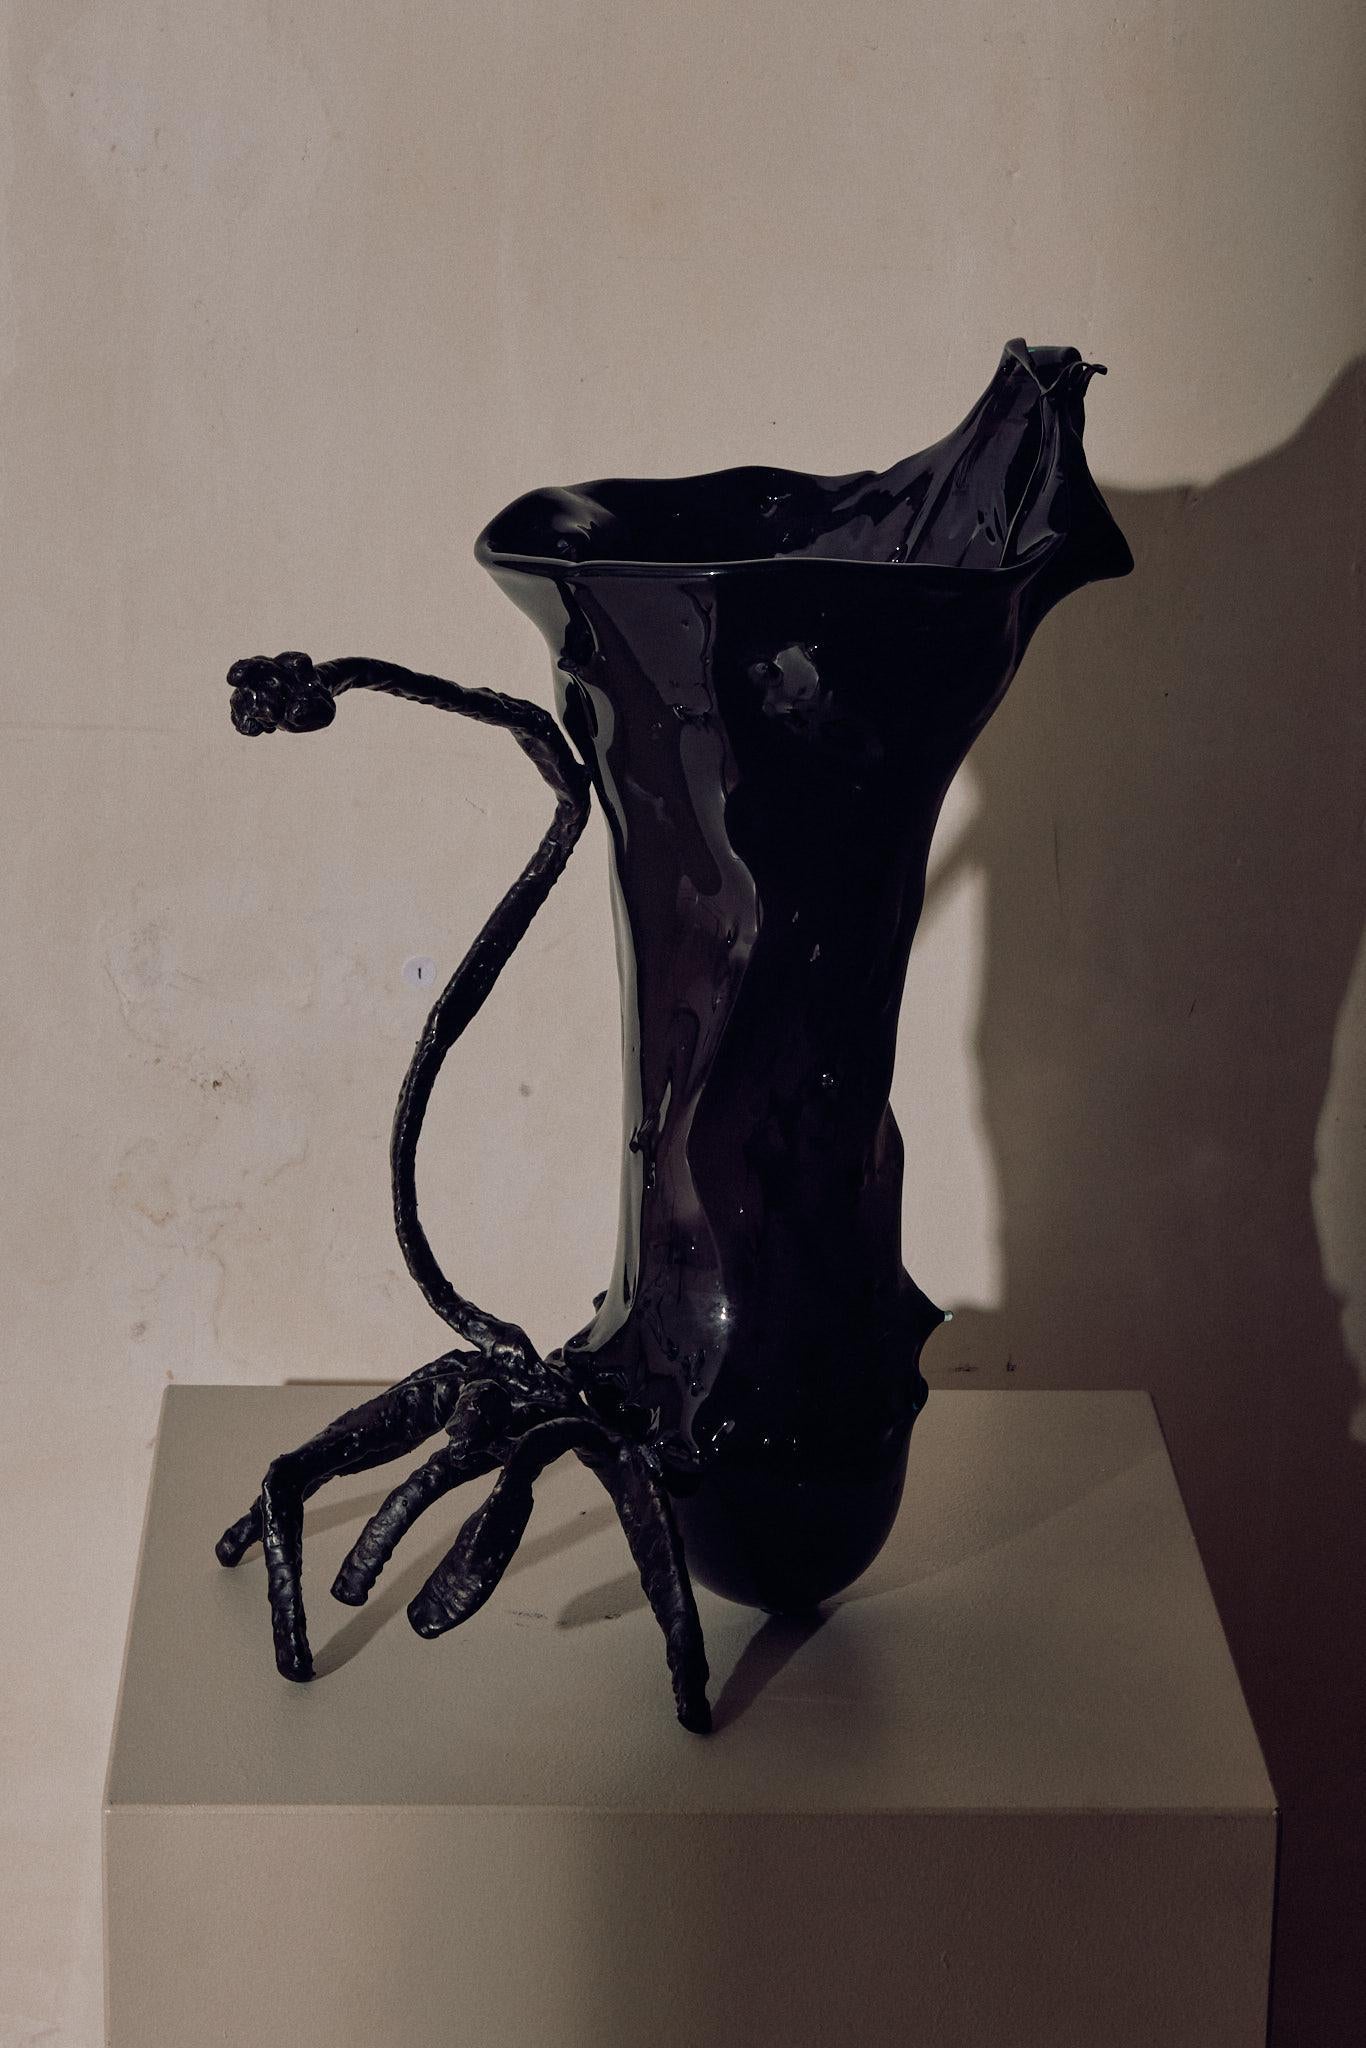 Post-Modern Jug For Water Vase by Michael Gittings